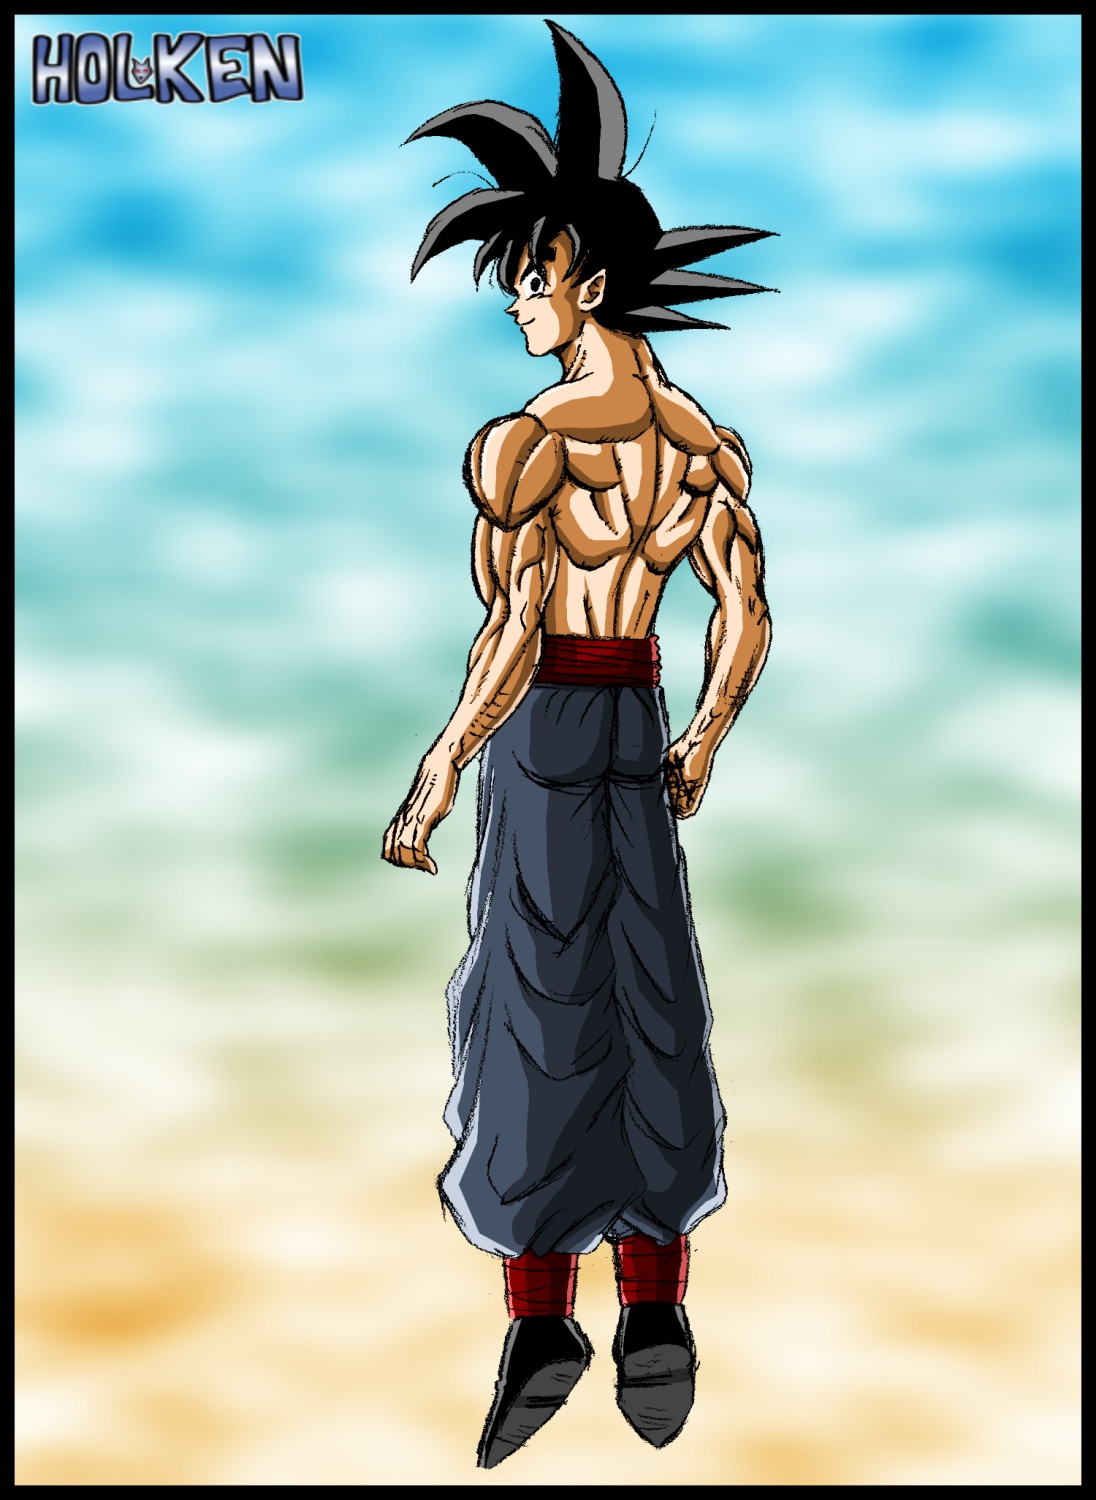 Goku Back Muscle 02 By DBZwarrior On DeviantArt.